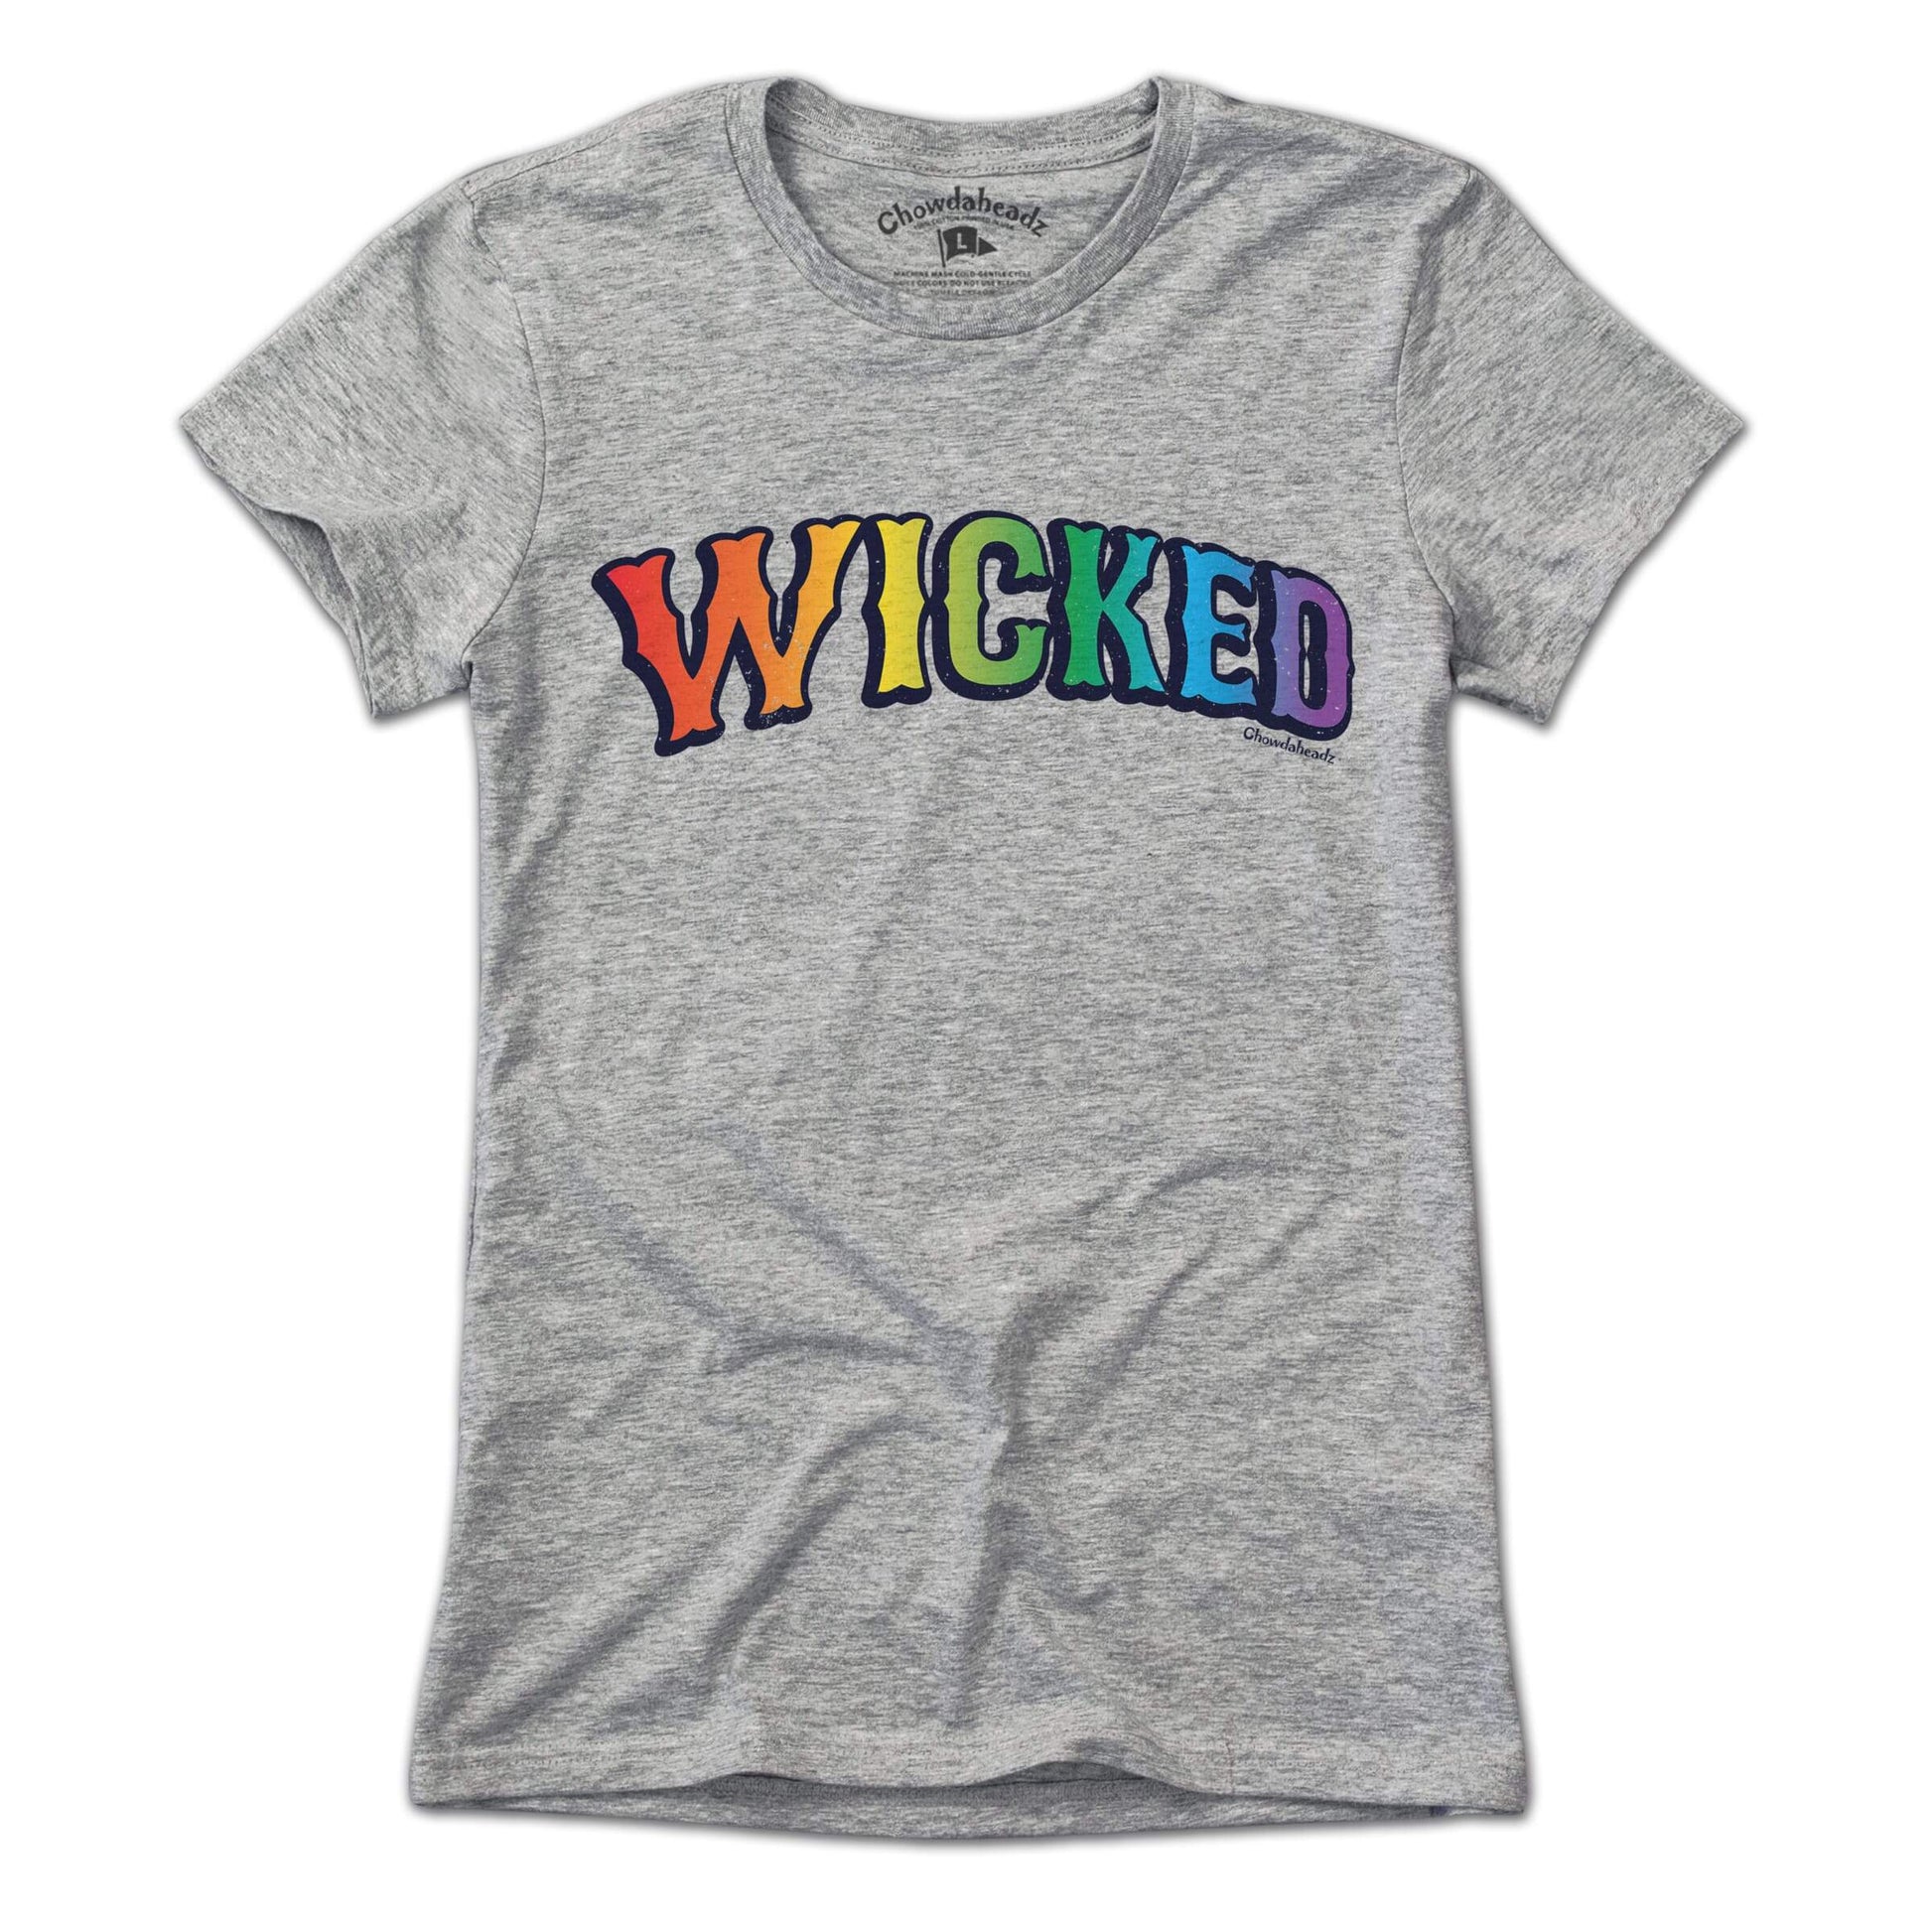 Wicked Proud Banner T-Shirt - Chowdaheadz